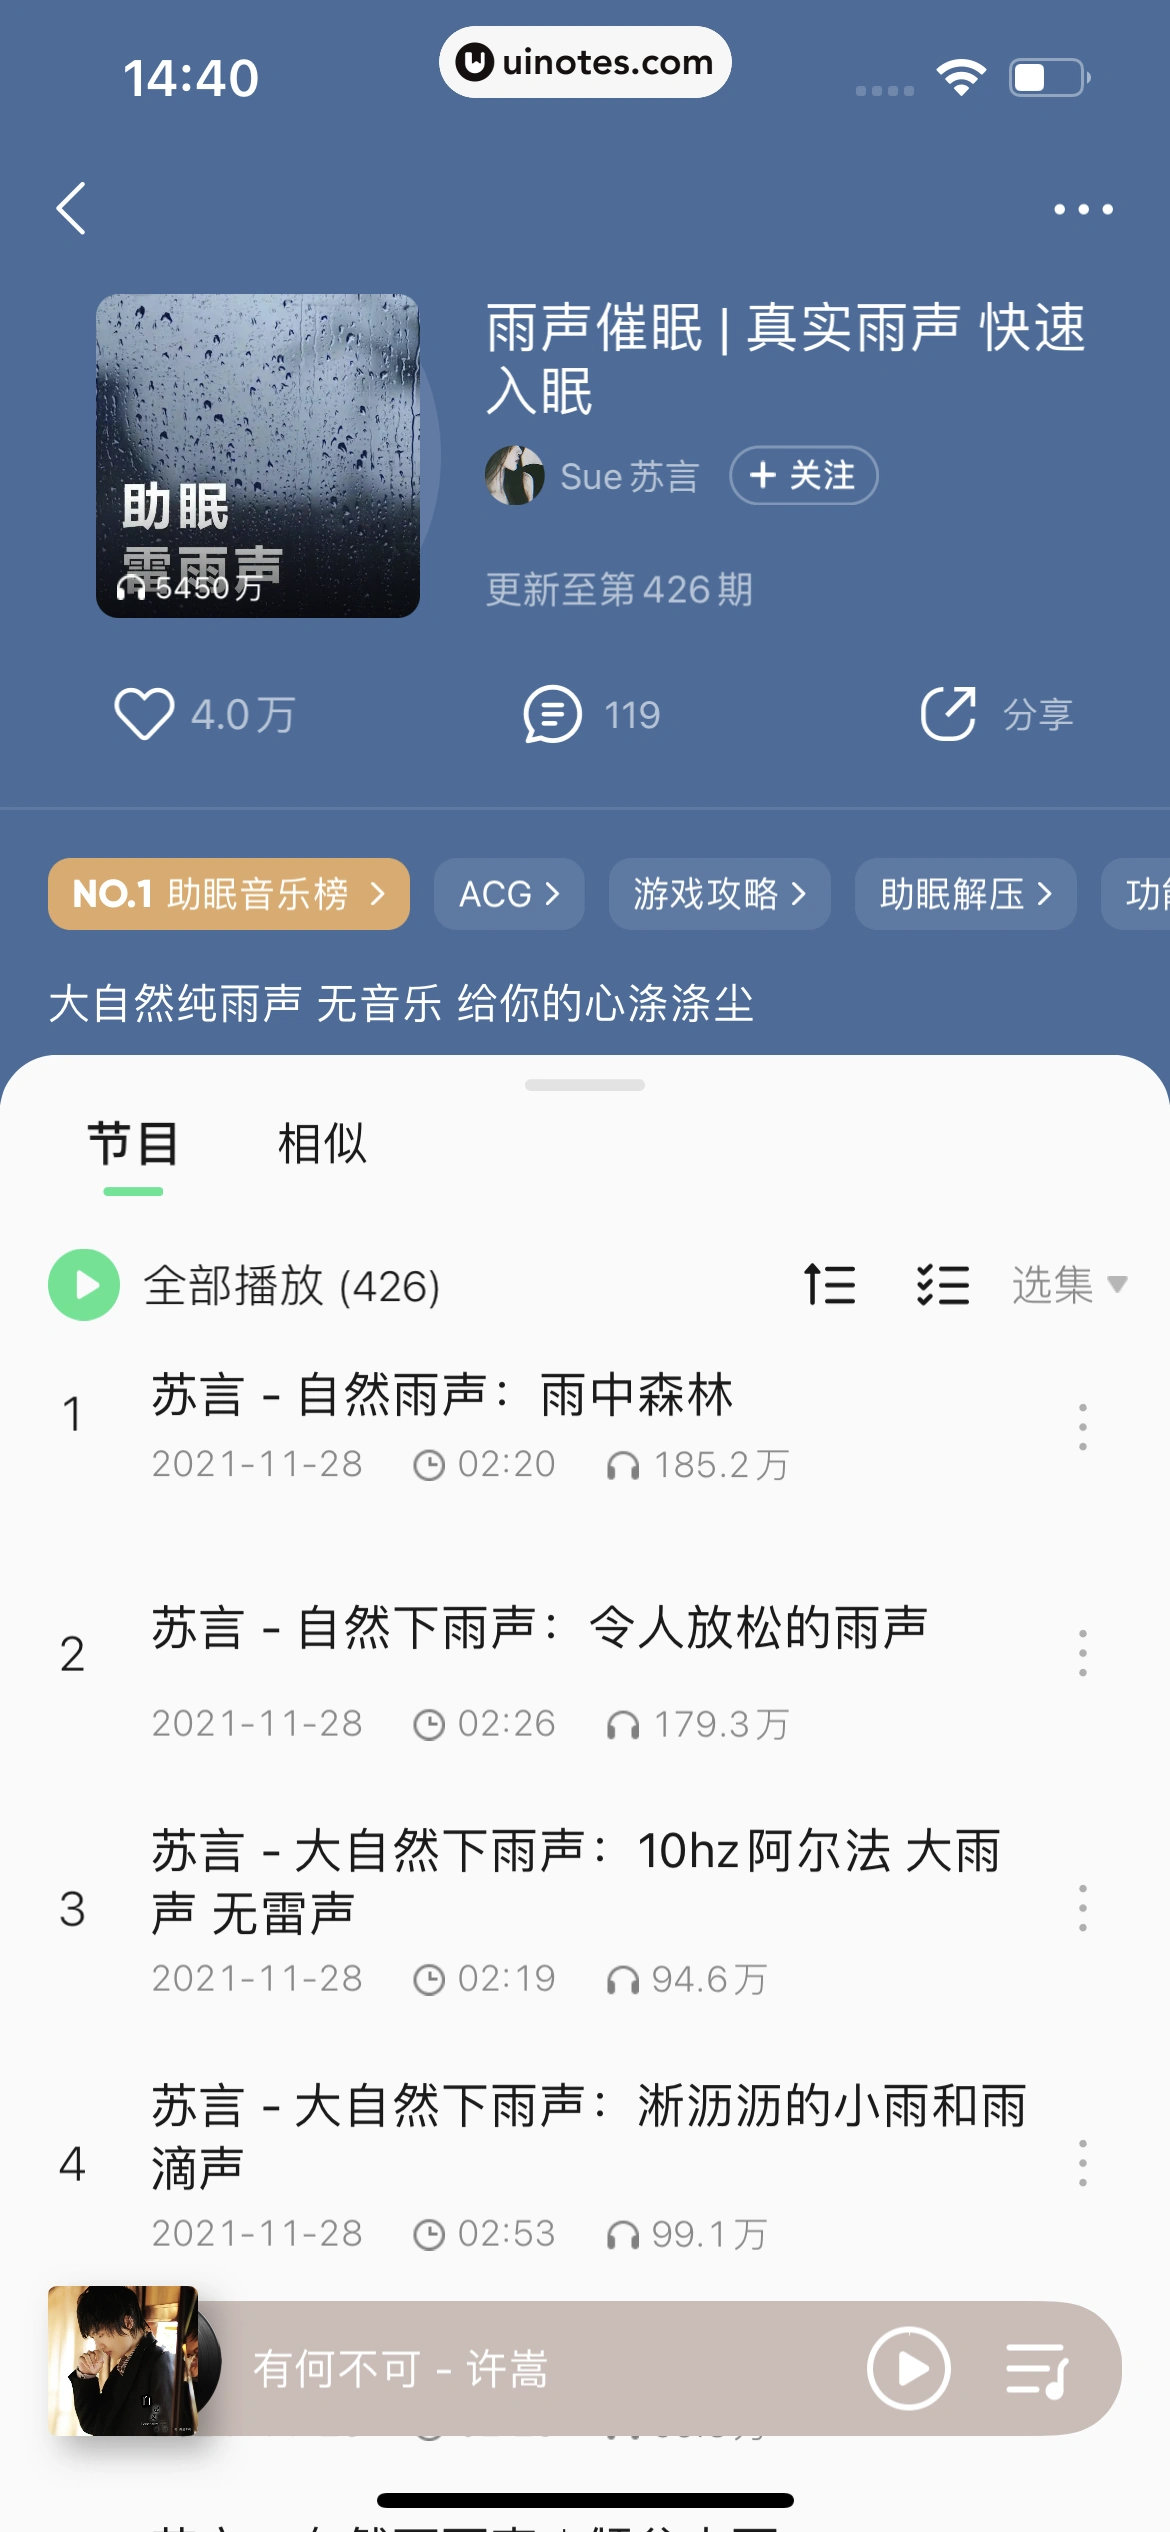 QQ音乐 App 截图 124 - UI Notes